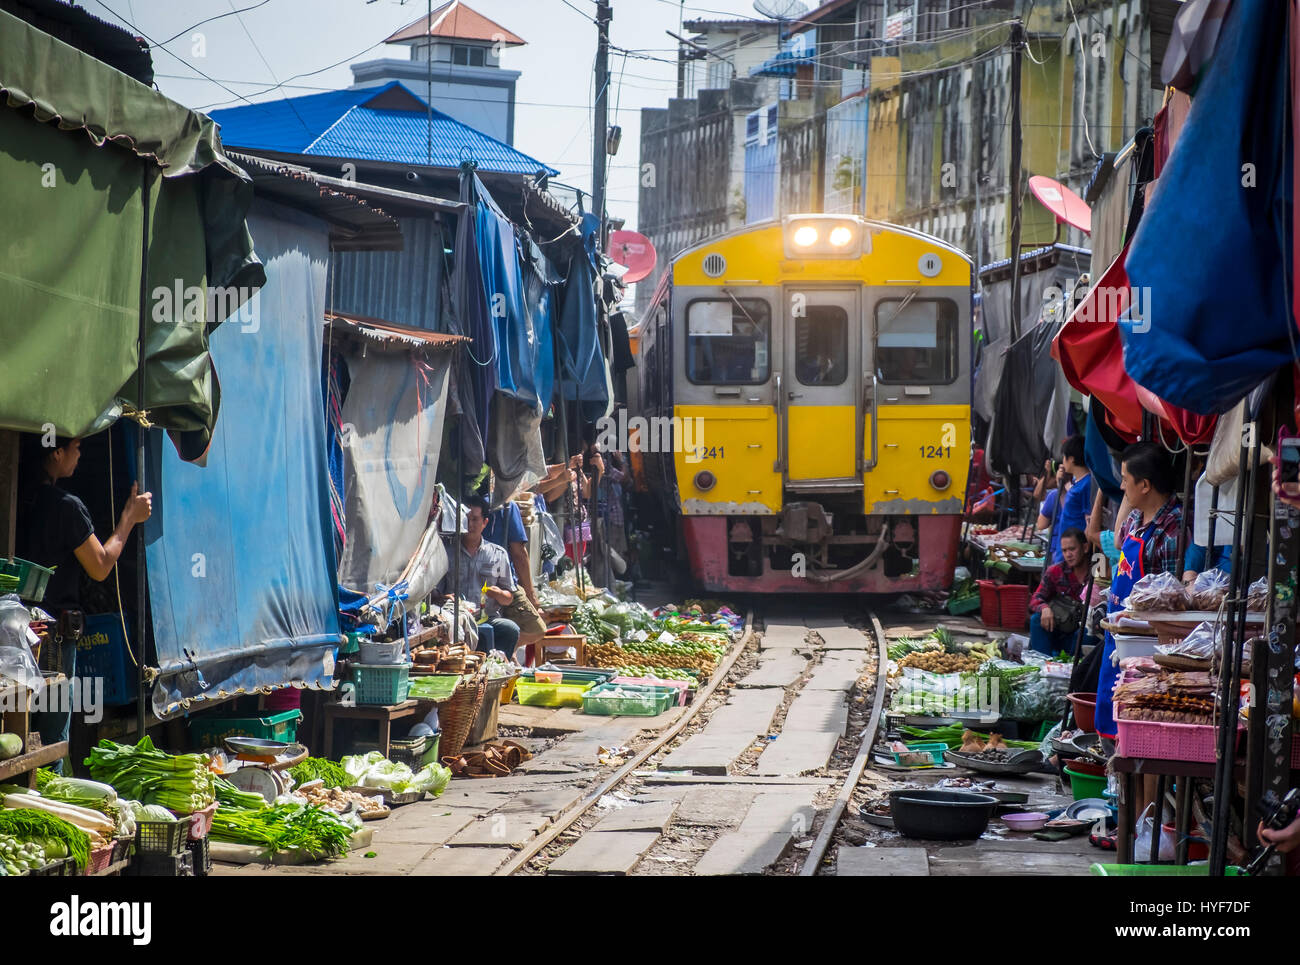 MAE KLONG - TAHILAND - CIRCA SEPTEMBER 2014: Train approaching the stalls at the Maeklong Railway Market Stock Photo